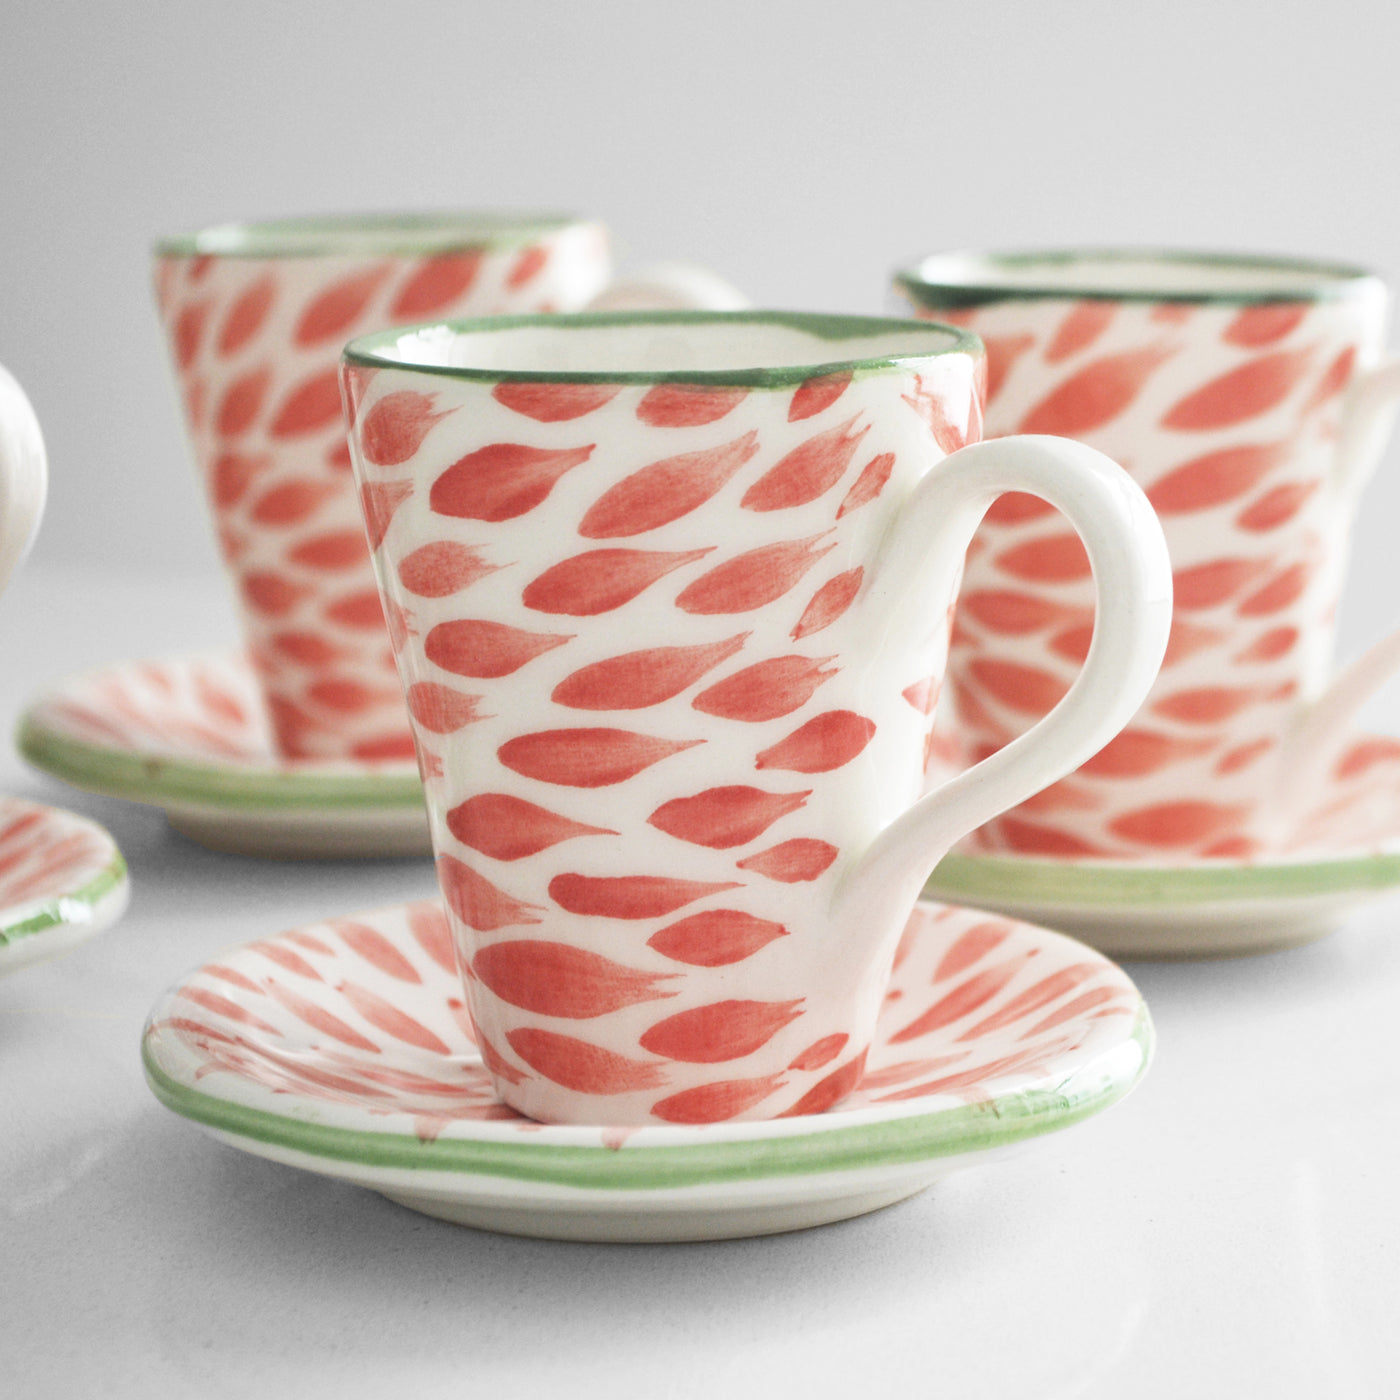 Floral Red Espresso Cups (set of 6) - Ileana Makri